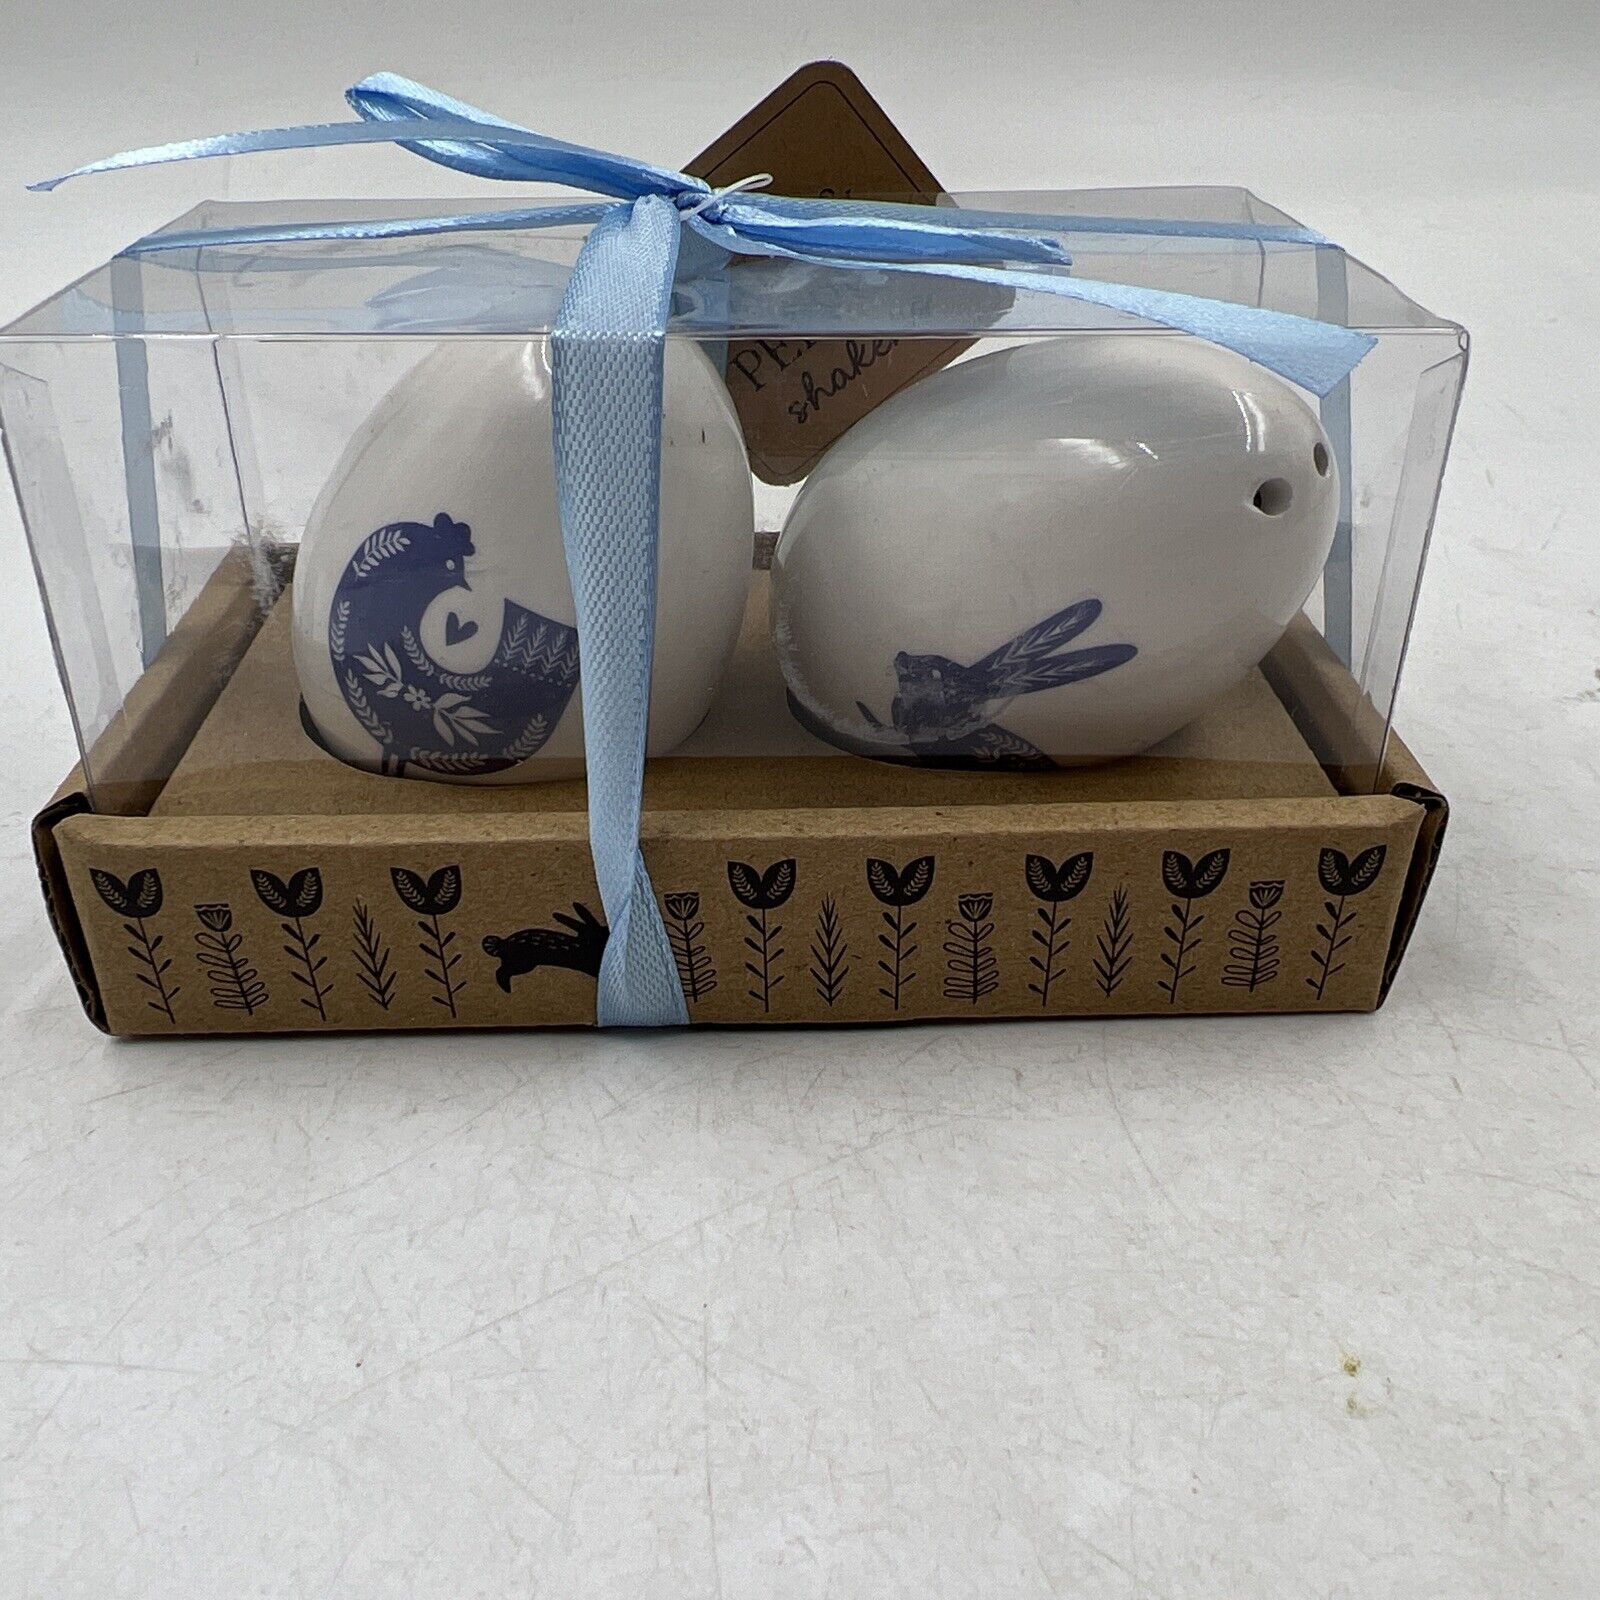 Eccolo Ceramic Egg Rooster & Rabbit Salt & Pepper Shakers AA01B25019